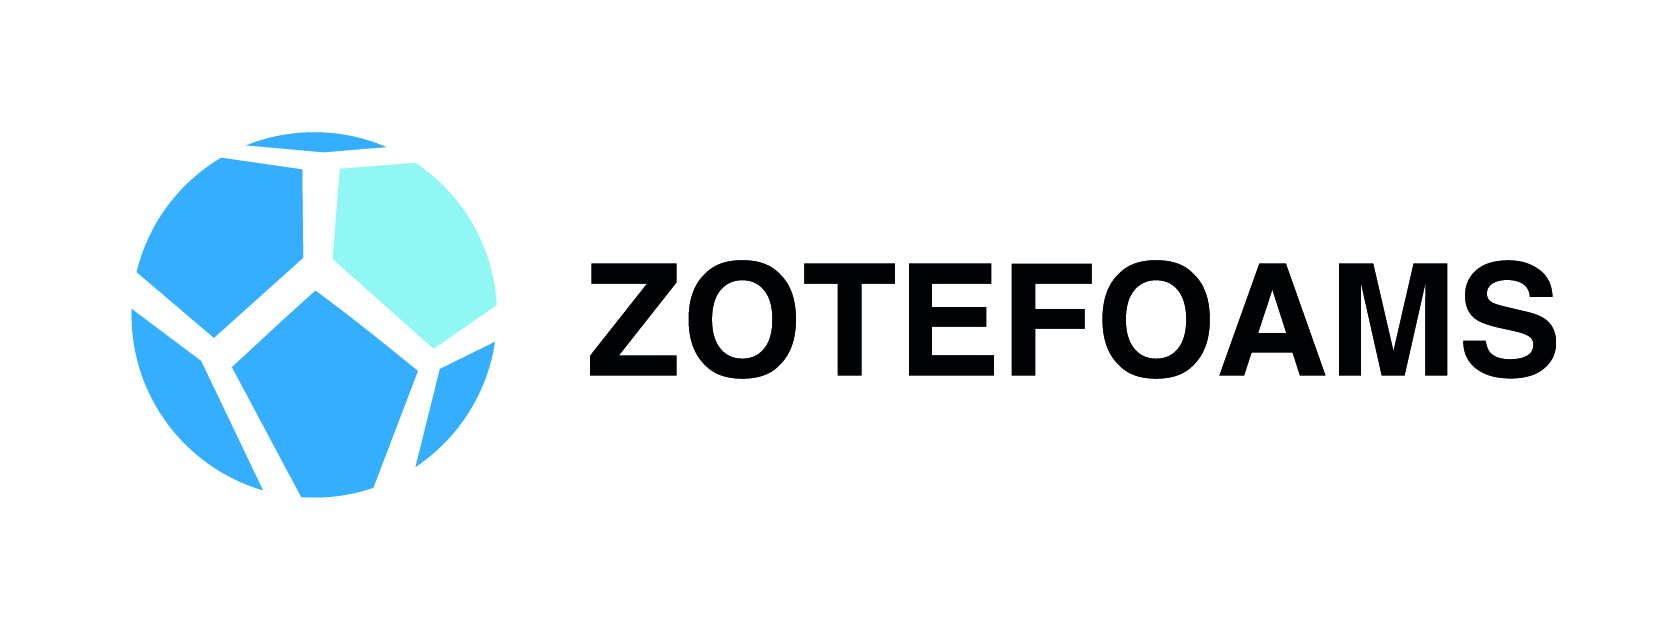 Zotefoams logo - KpH Environmental services clients